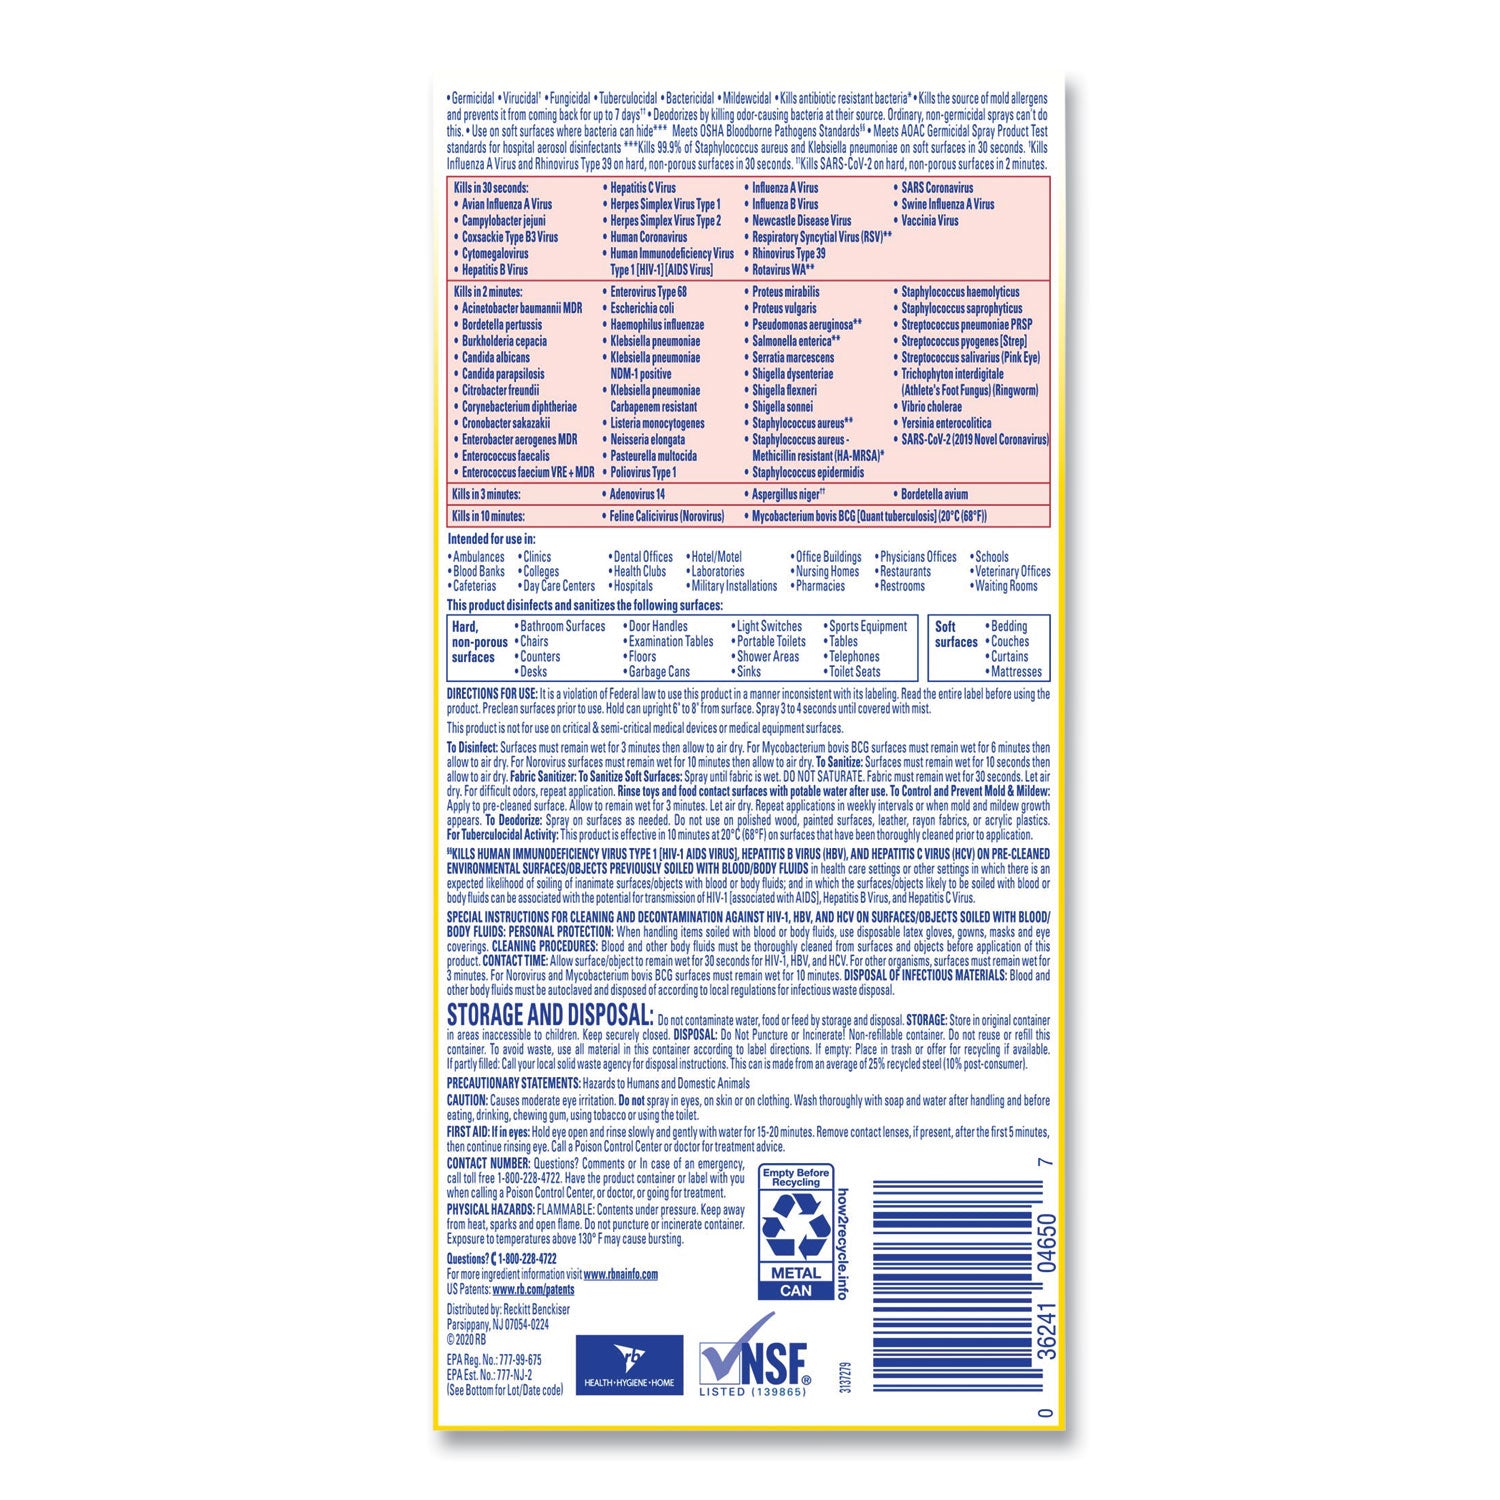 Disinfectant Spray, Original Scent, 19 oz Aerosol Spray, 12/Carton - 